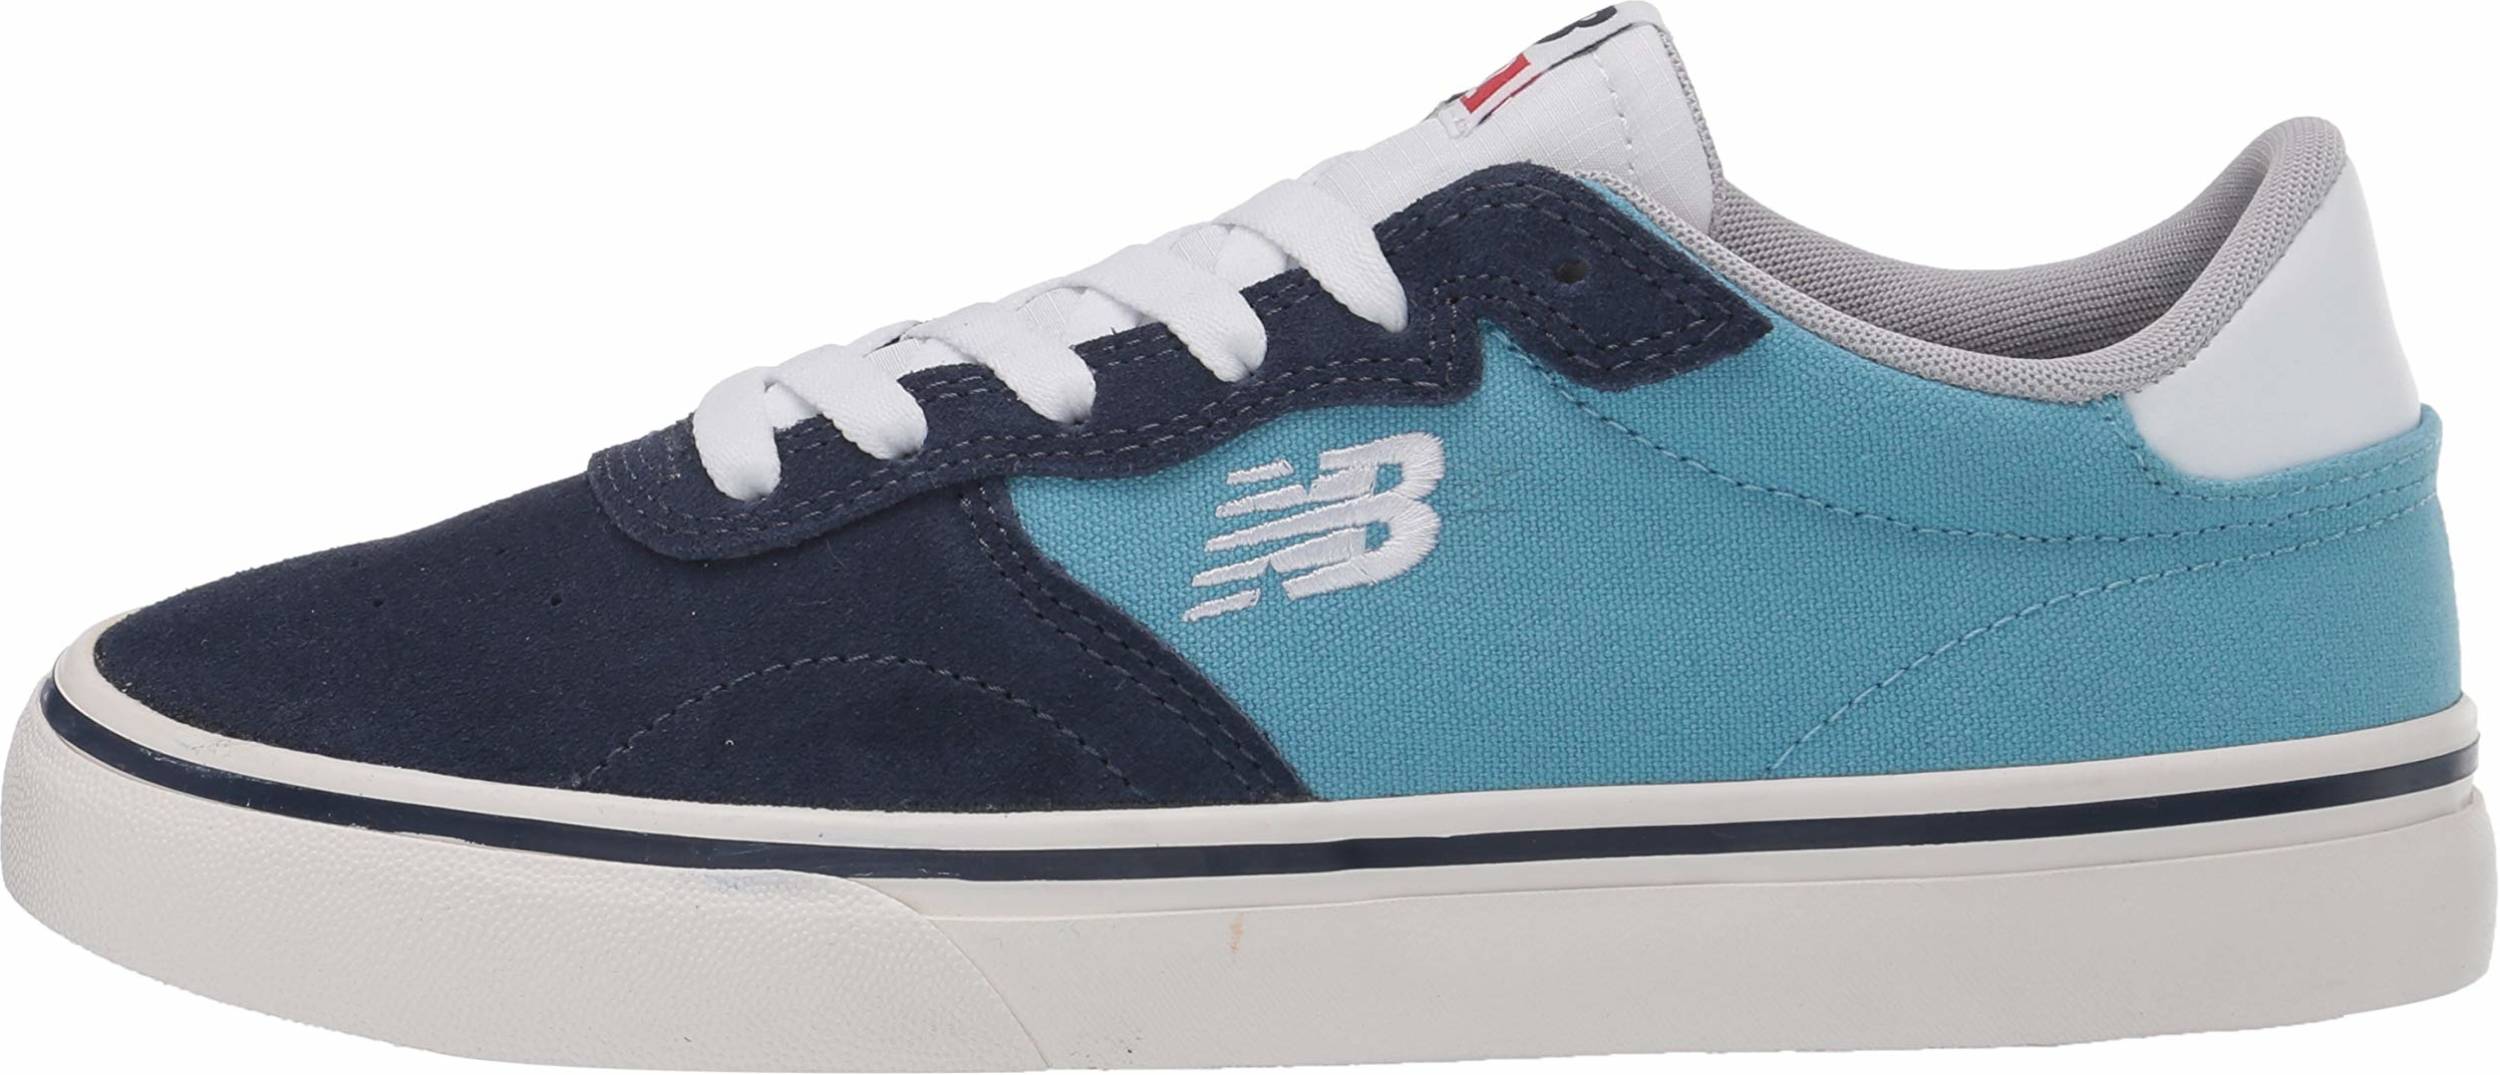 20 Blue New Balance sneakers - Save 41% | RunRepeat